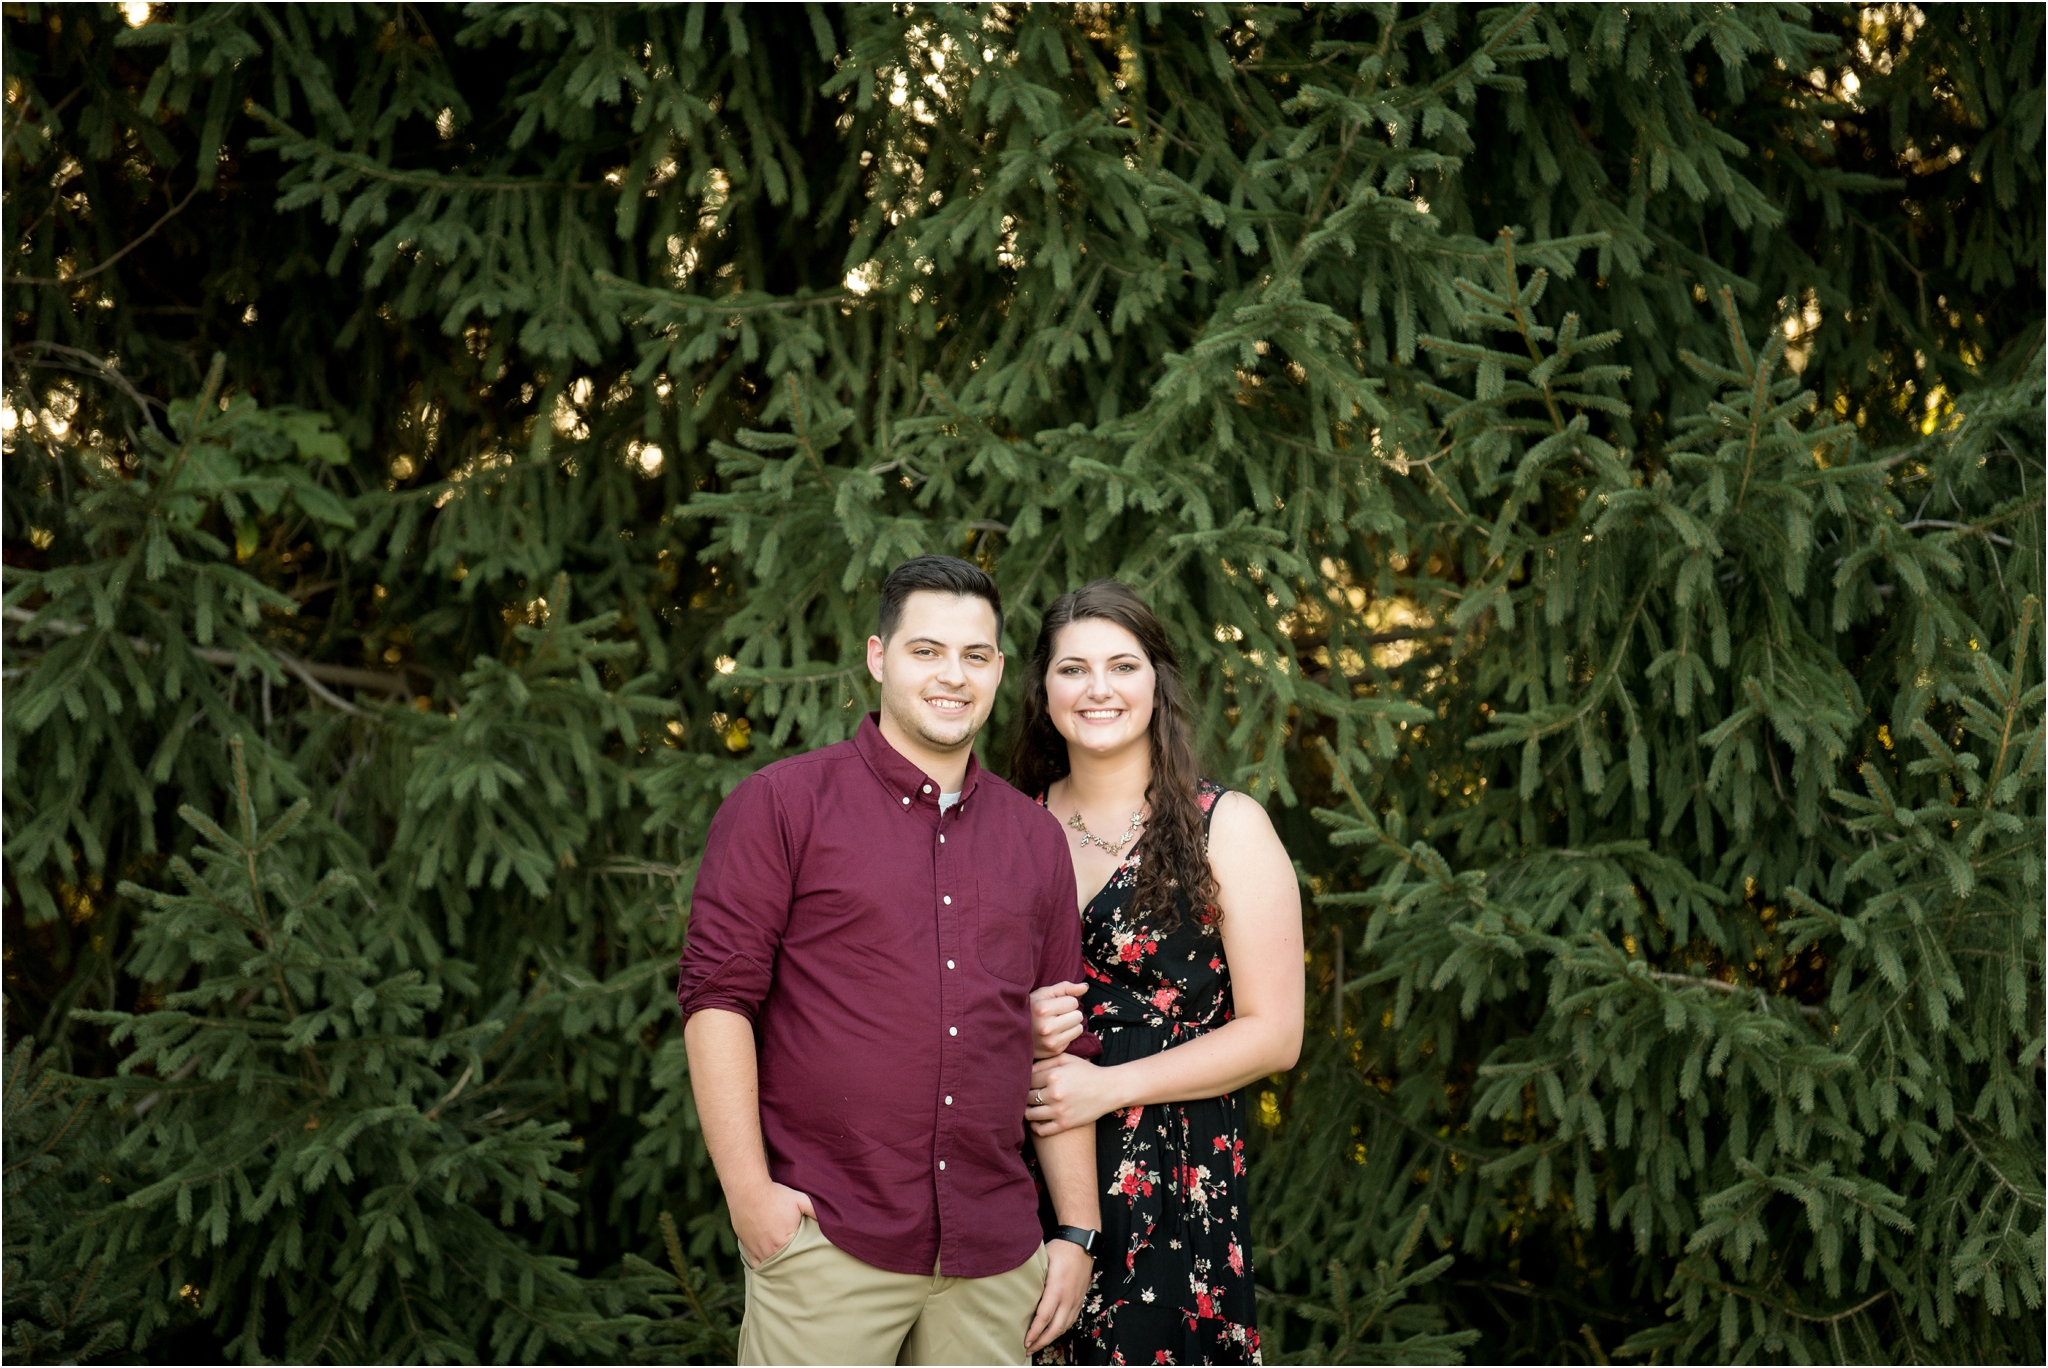 Fort Wayne Engagement Session | Sarah and Rachel Wedding Photographers | Salomon Farms 